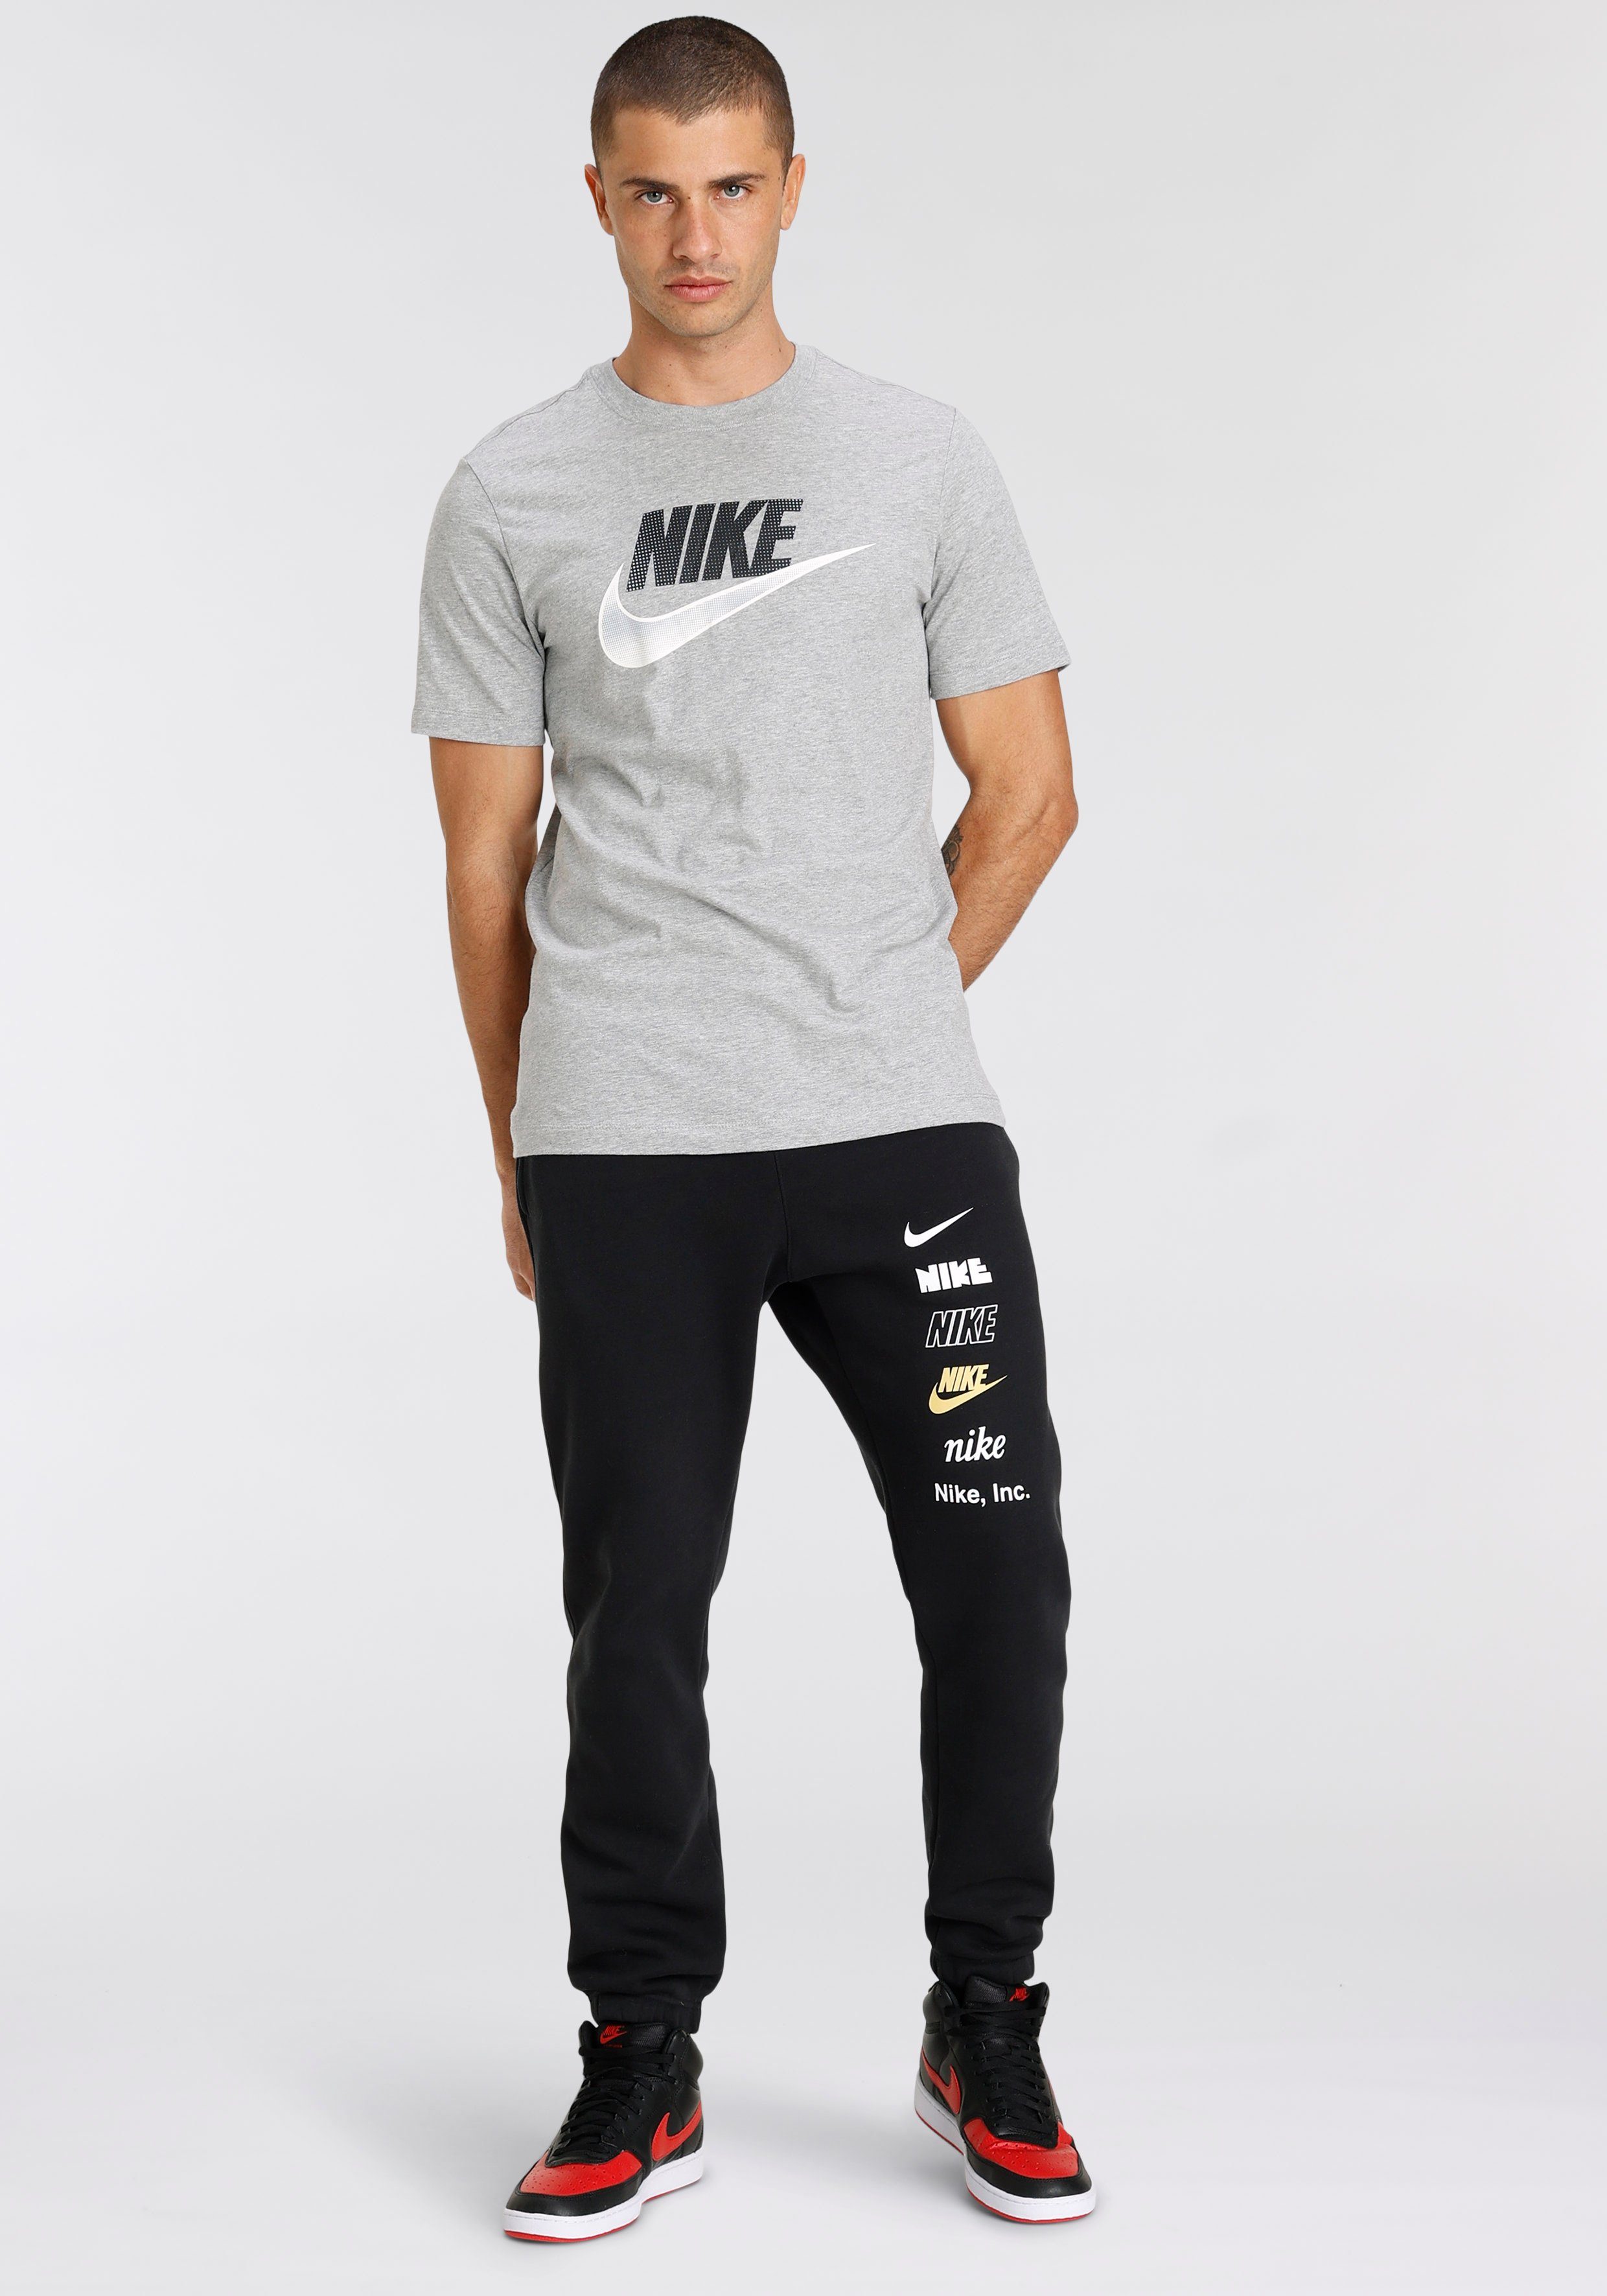 [Neuer Eröffnungsverkauf] Nike Sportswear T-Shirt Men's DK HEATHER T-Shirt GREY